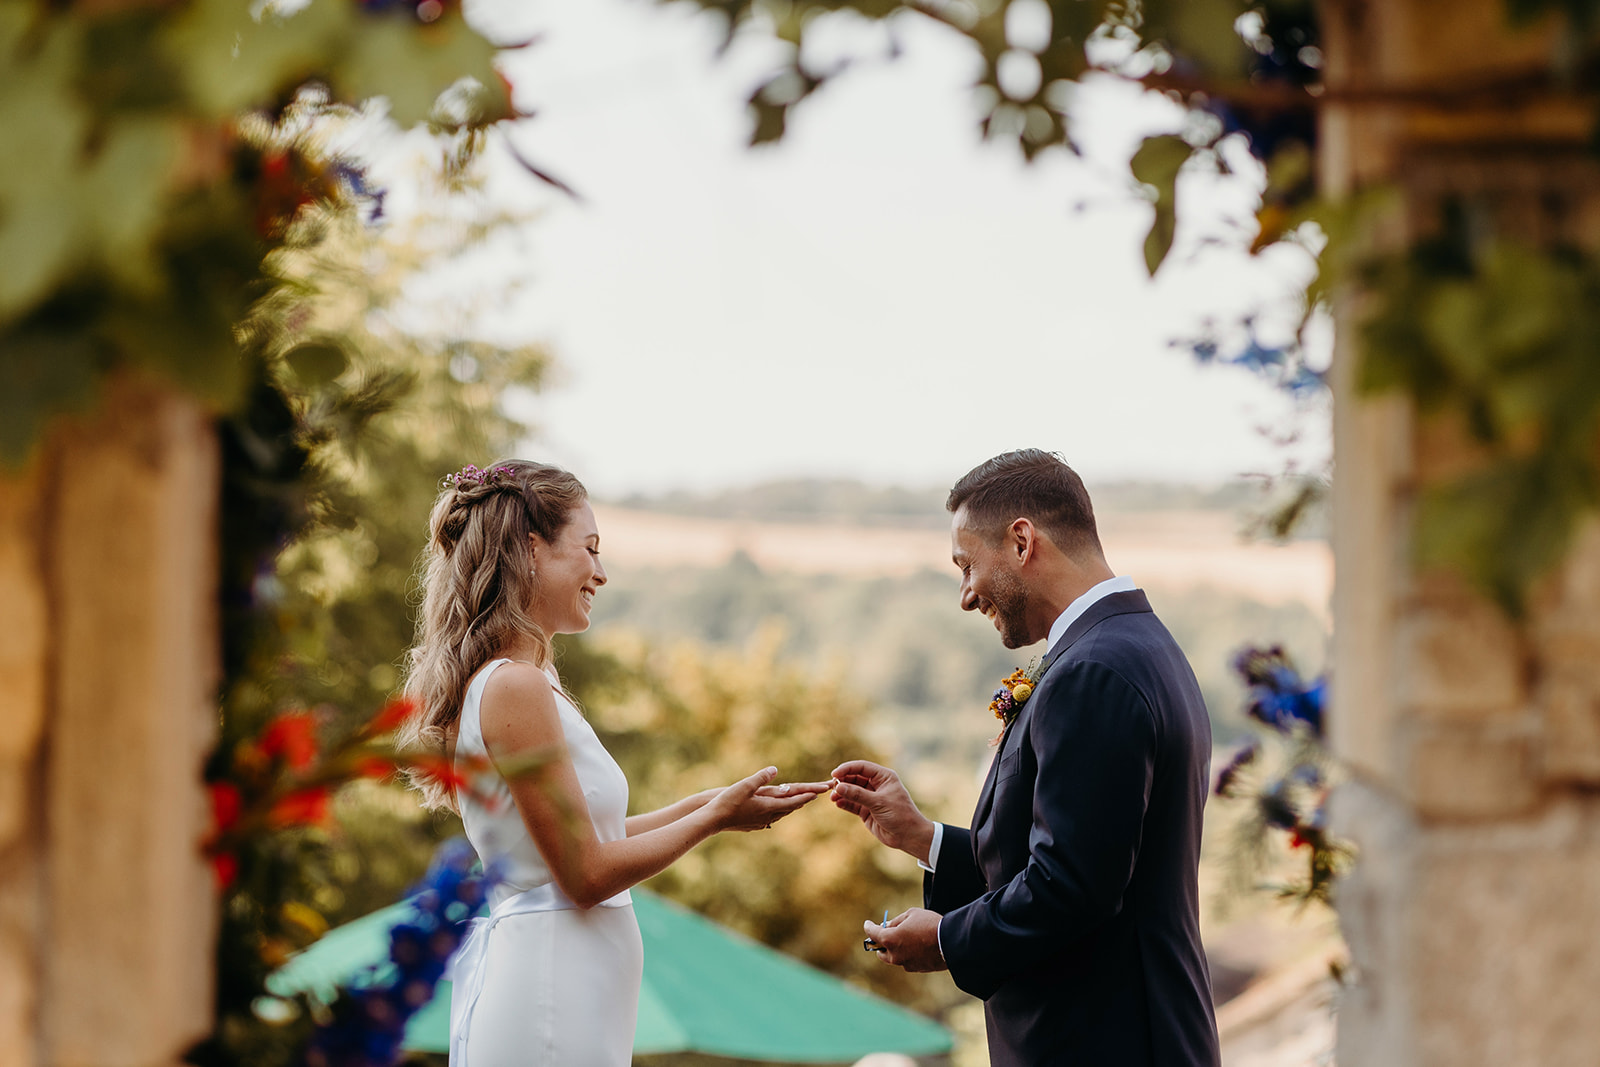 couple exchanging wedding rings at outdoor uk wedding